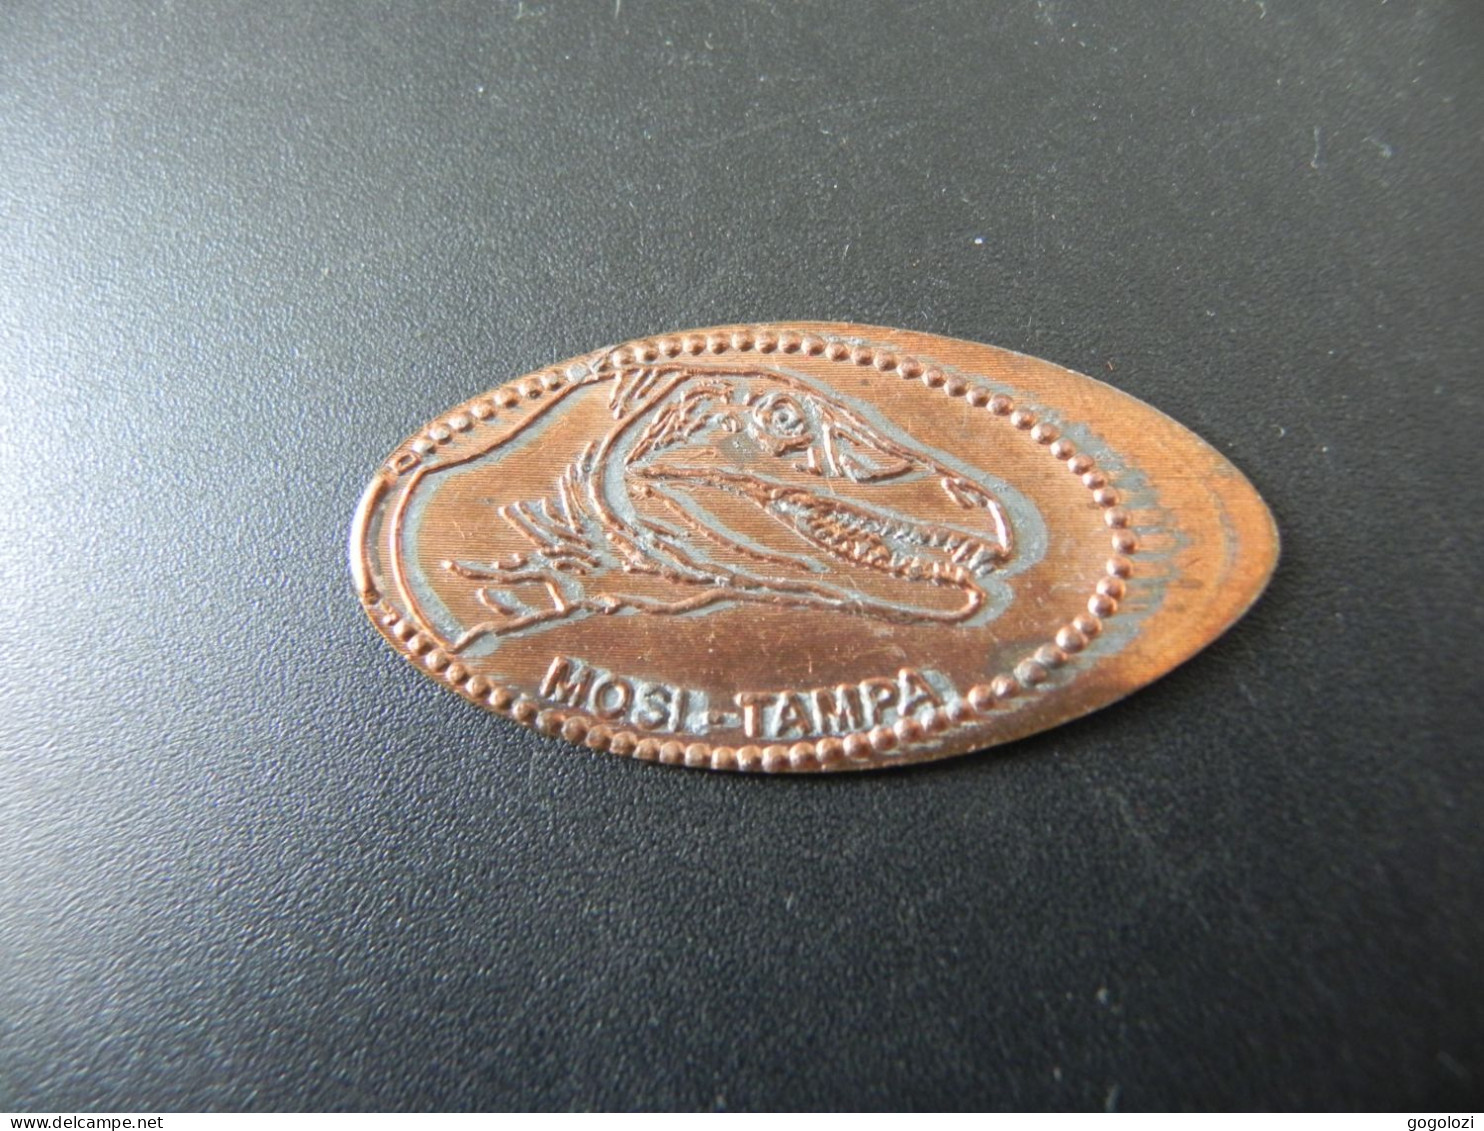 Jeton Token - Elongated Cent - USA - Mosi Tampa - Monedas Elongadas (elongated Coins)